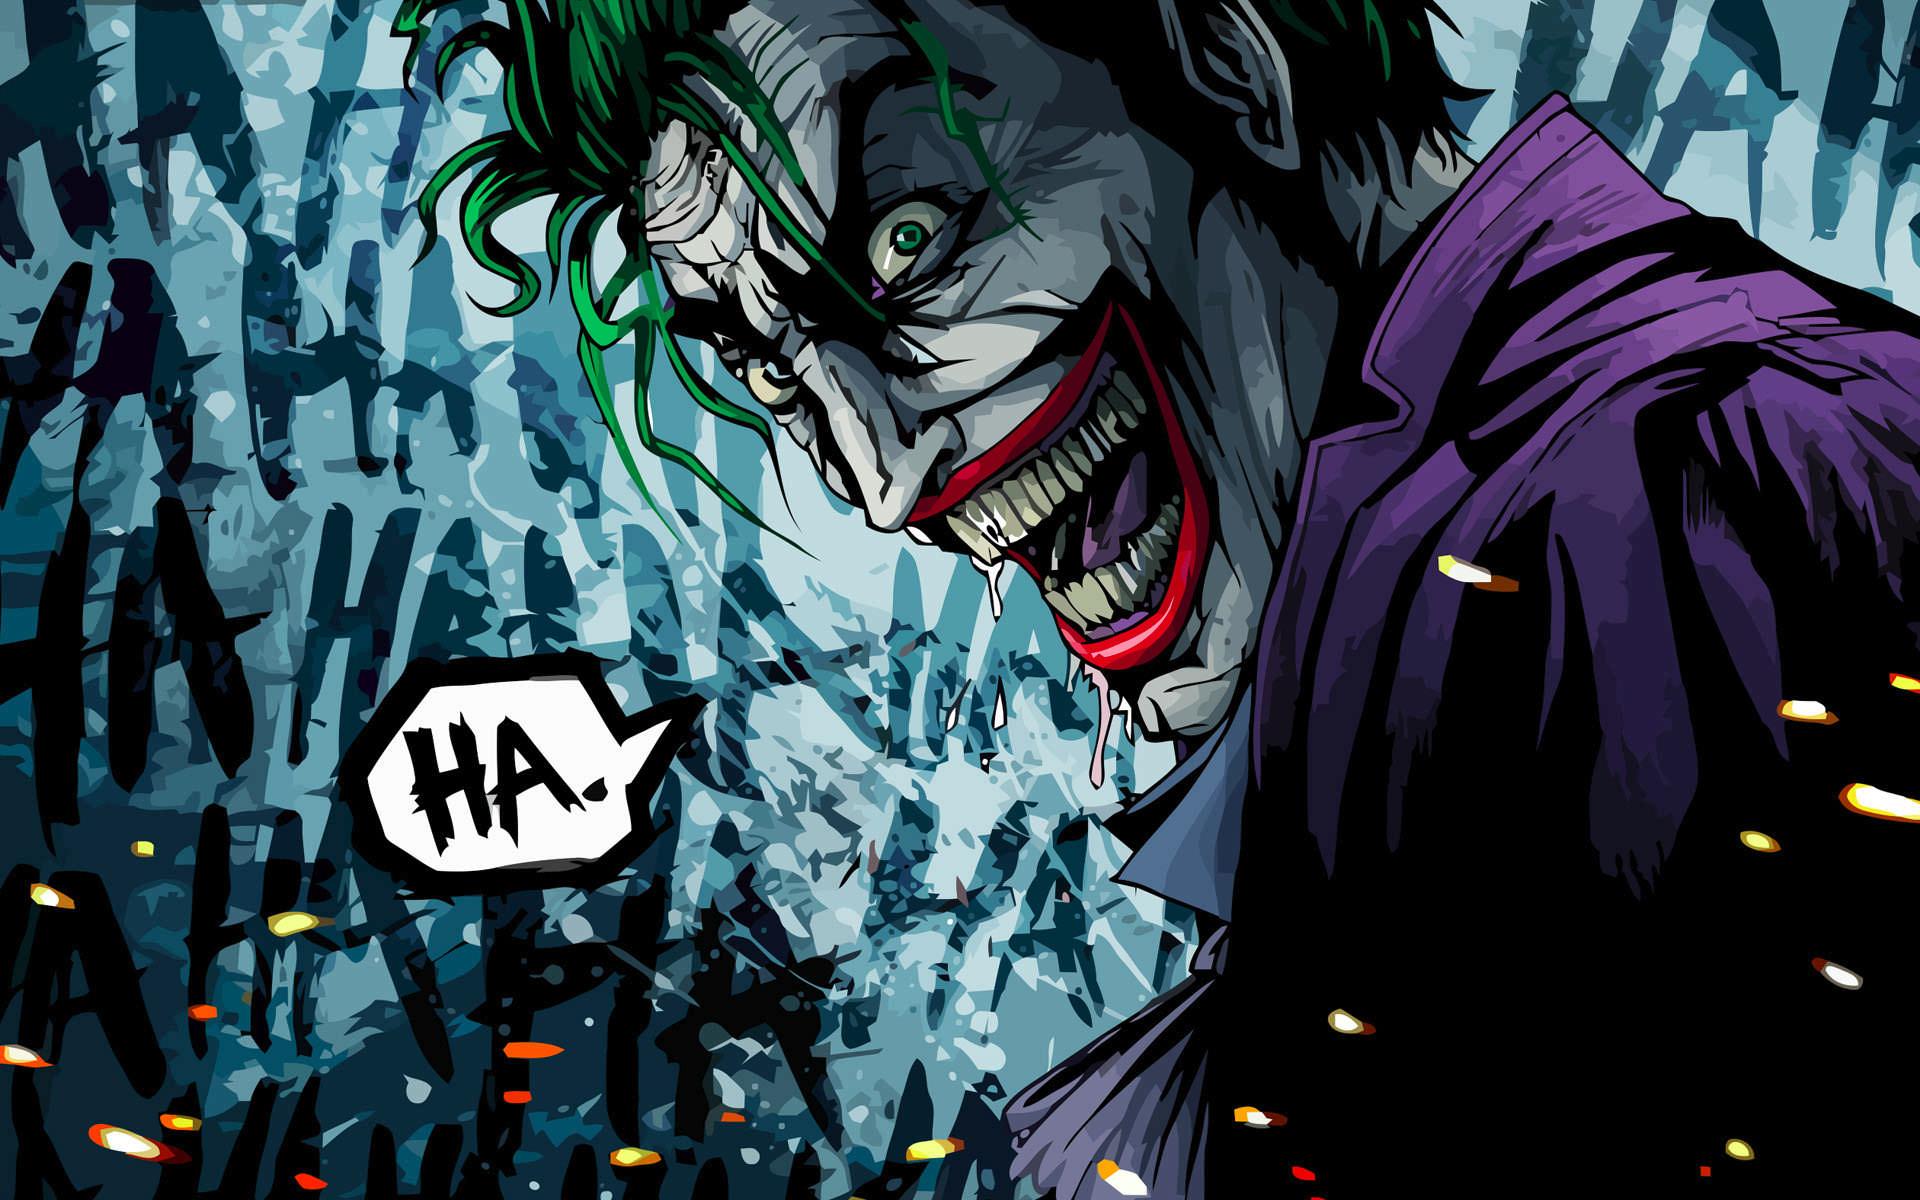 جوکر - دی سی کامیکس - بتمن - joker - batman - dc comics